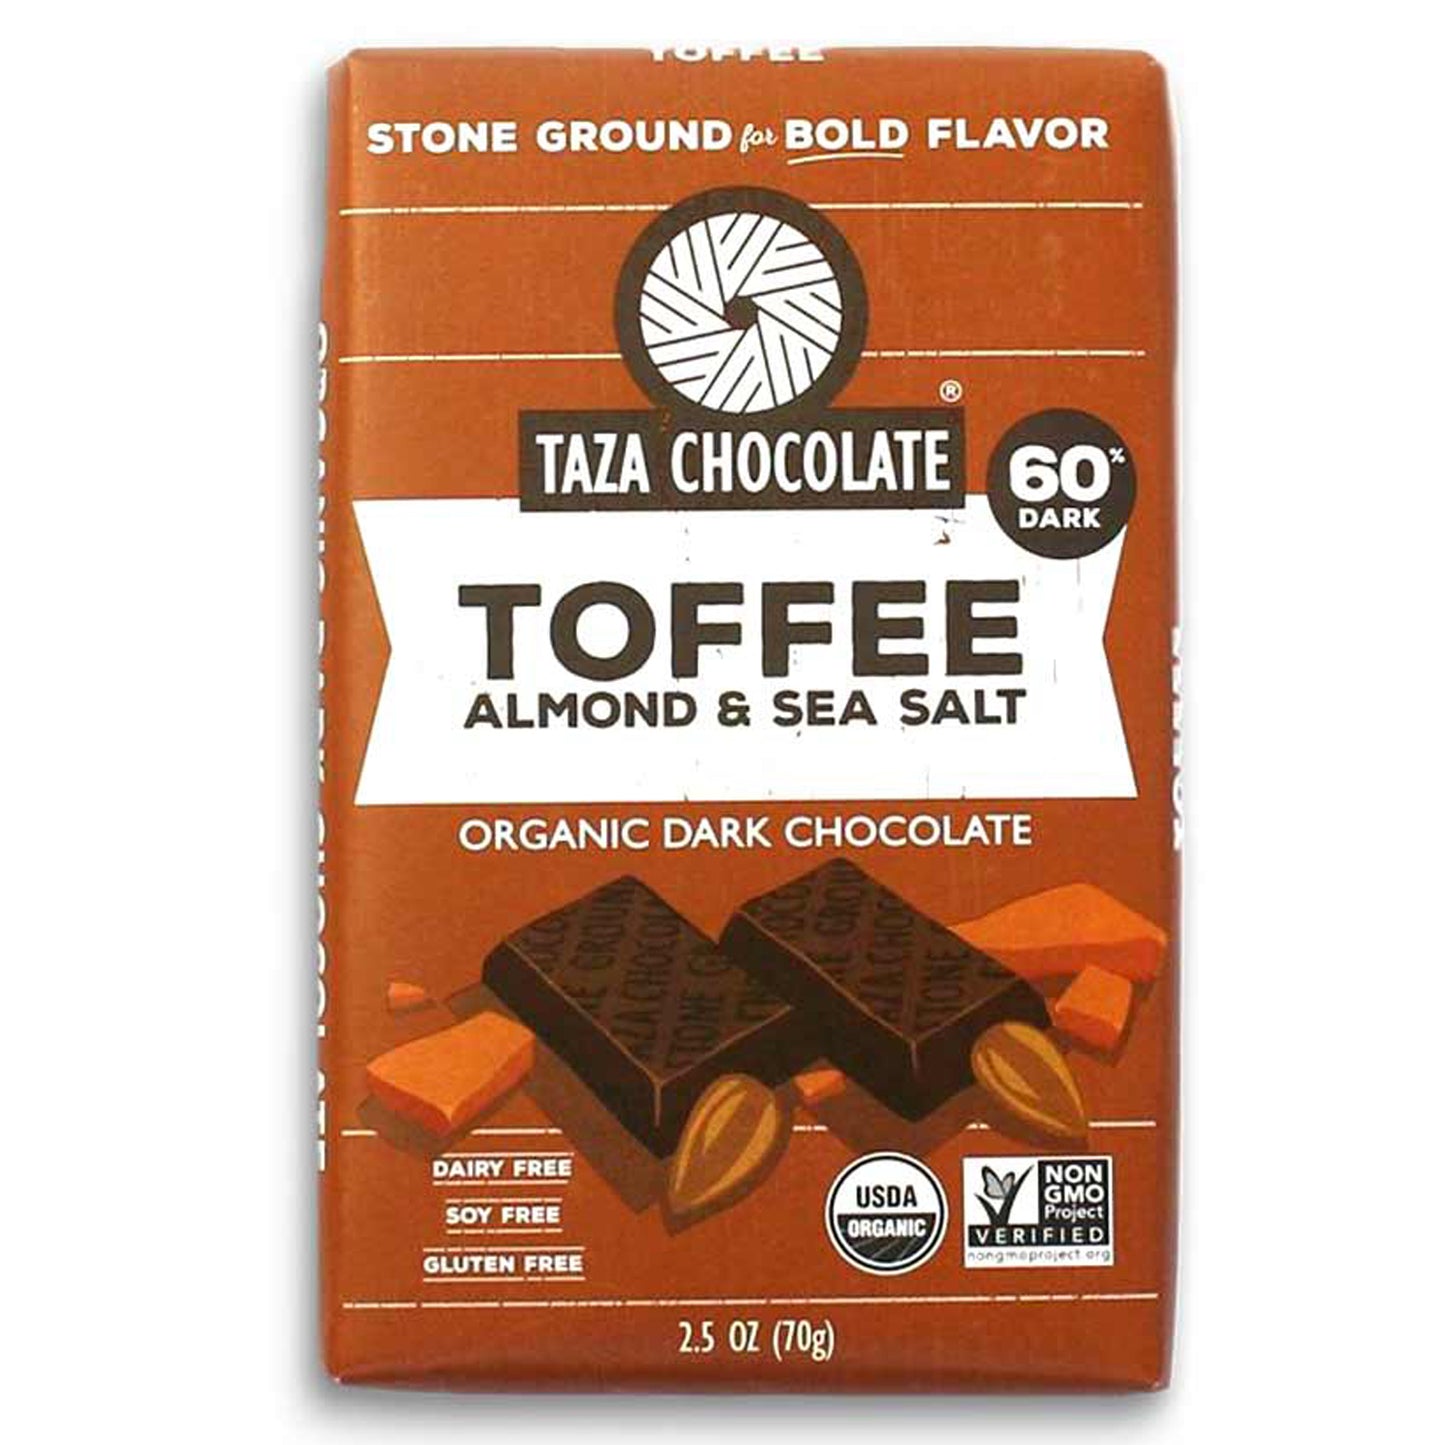 Toffee Almond & Sea Salt Organic Dark Chocolate